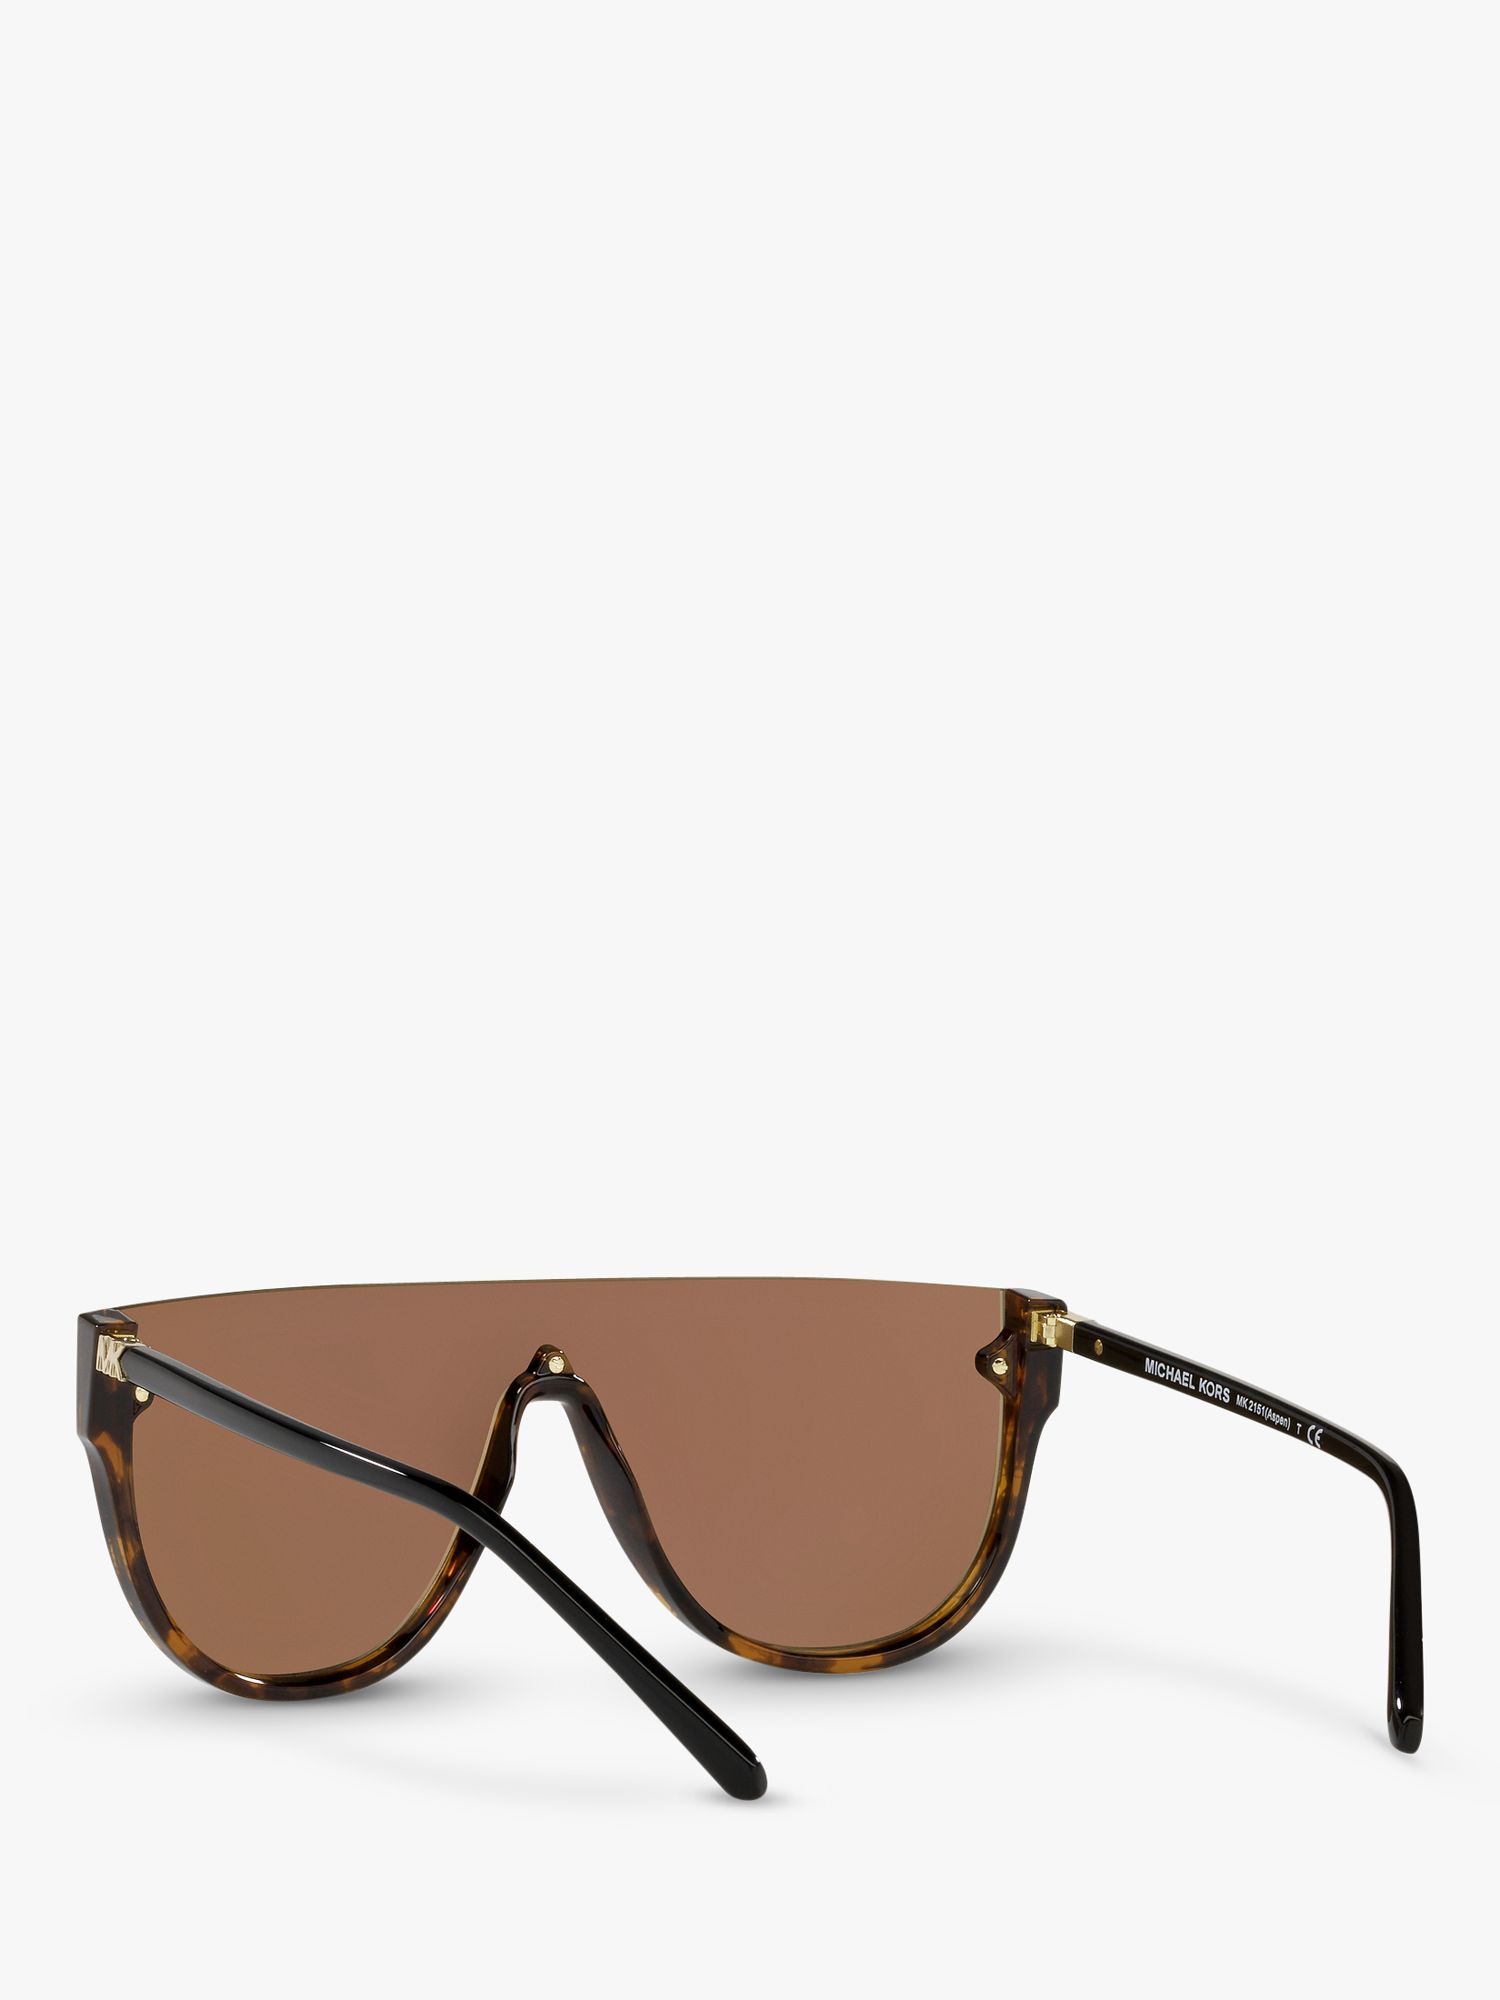 Michael Kors MK2151 Women's Aspen Irregular Sunglasses, Bio Dark Tortoise/Brown